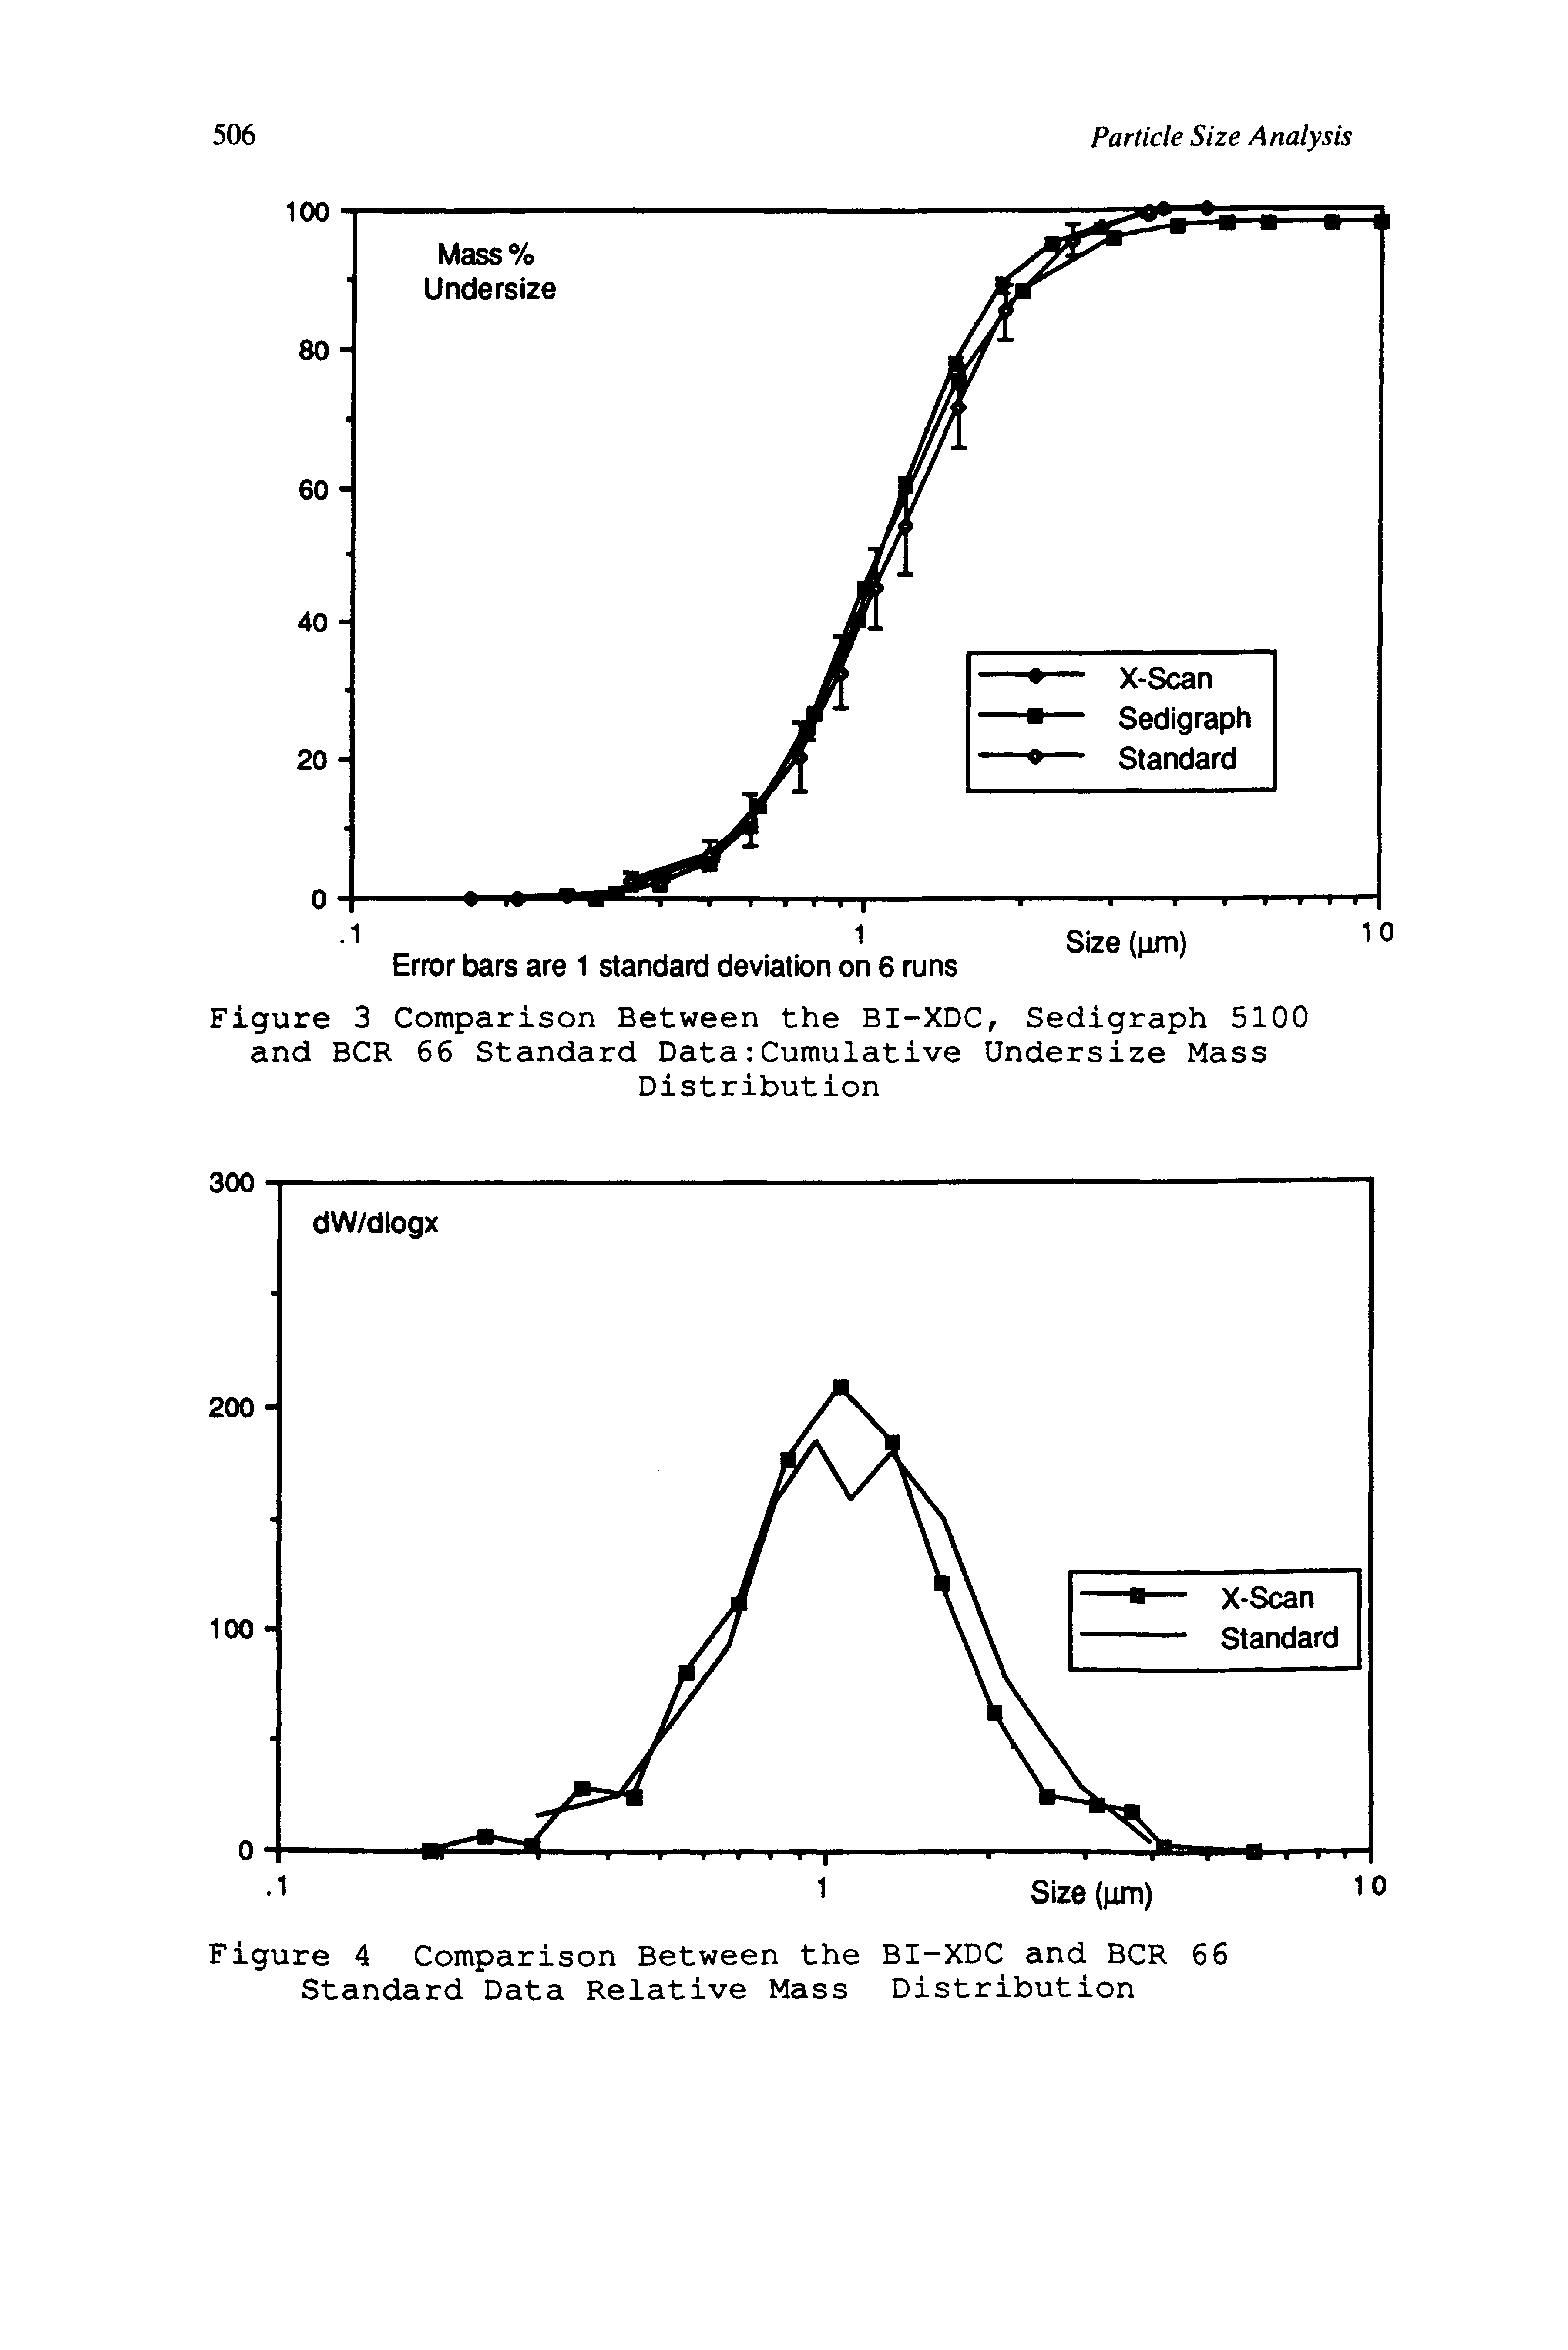 Figure 3 Comparison Between the BI-XDC, Sedigraph 5100 and BCR 66 Standard Data Cumulative Undersize Mass Distribution...